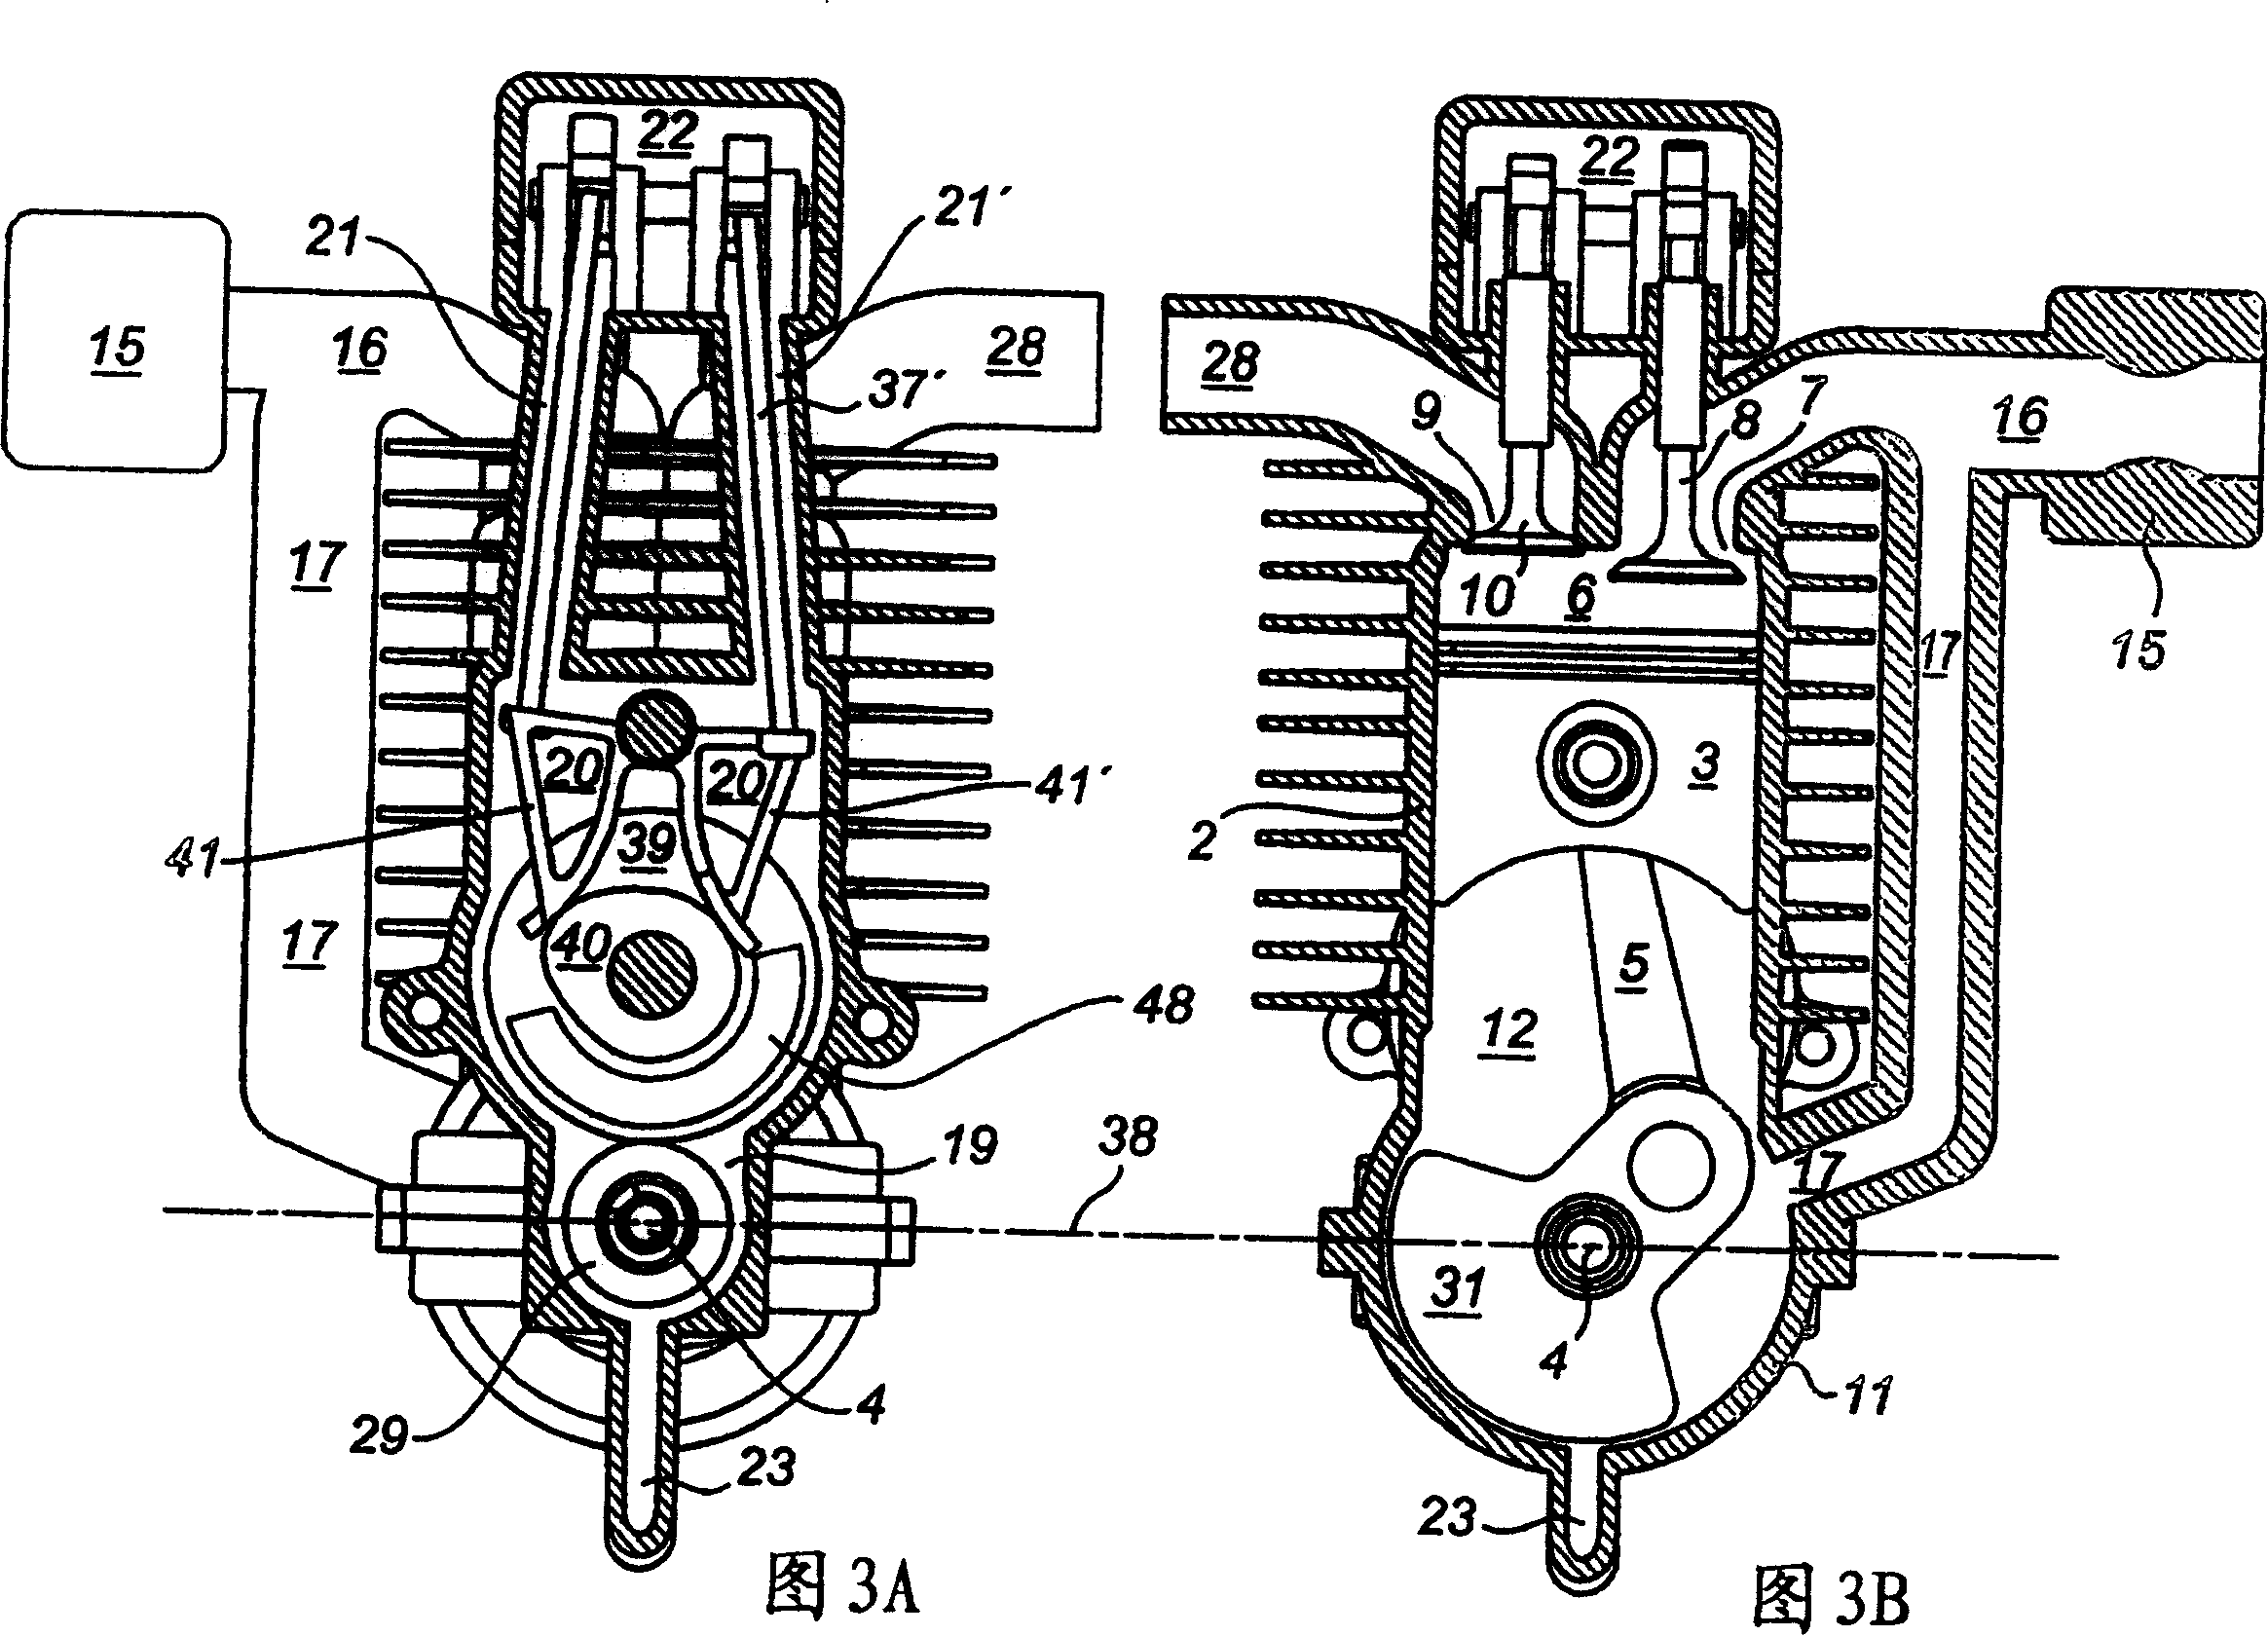 A four-stroke engine